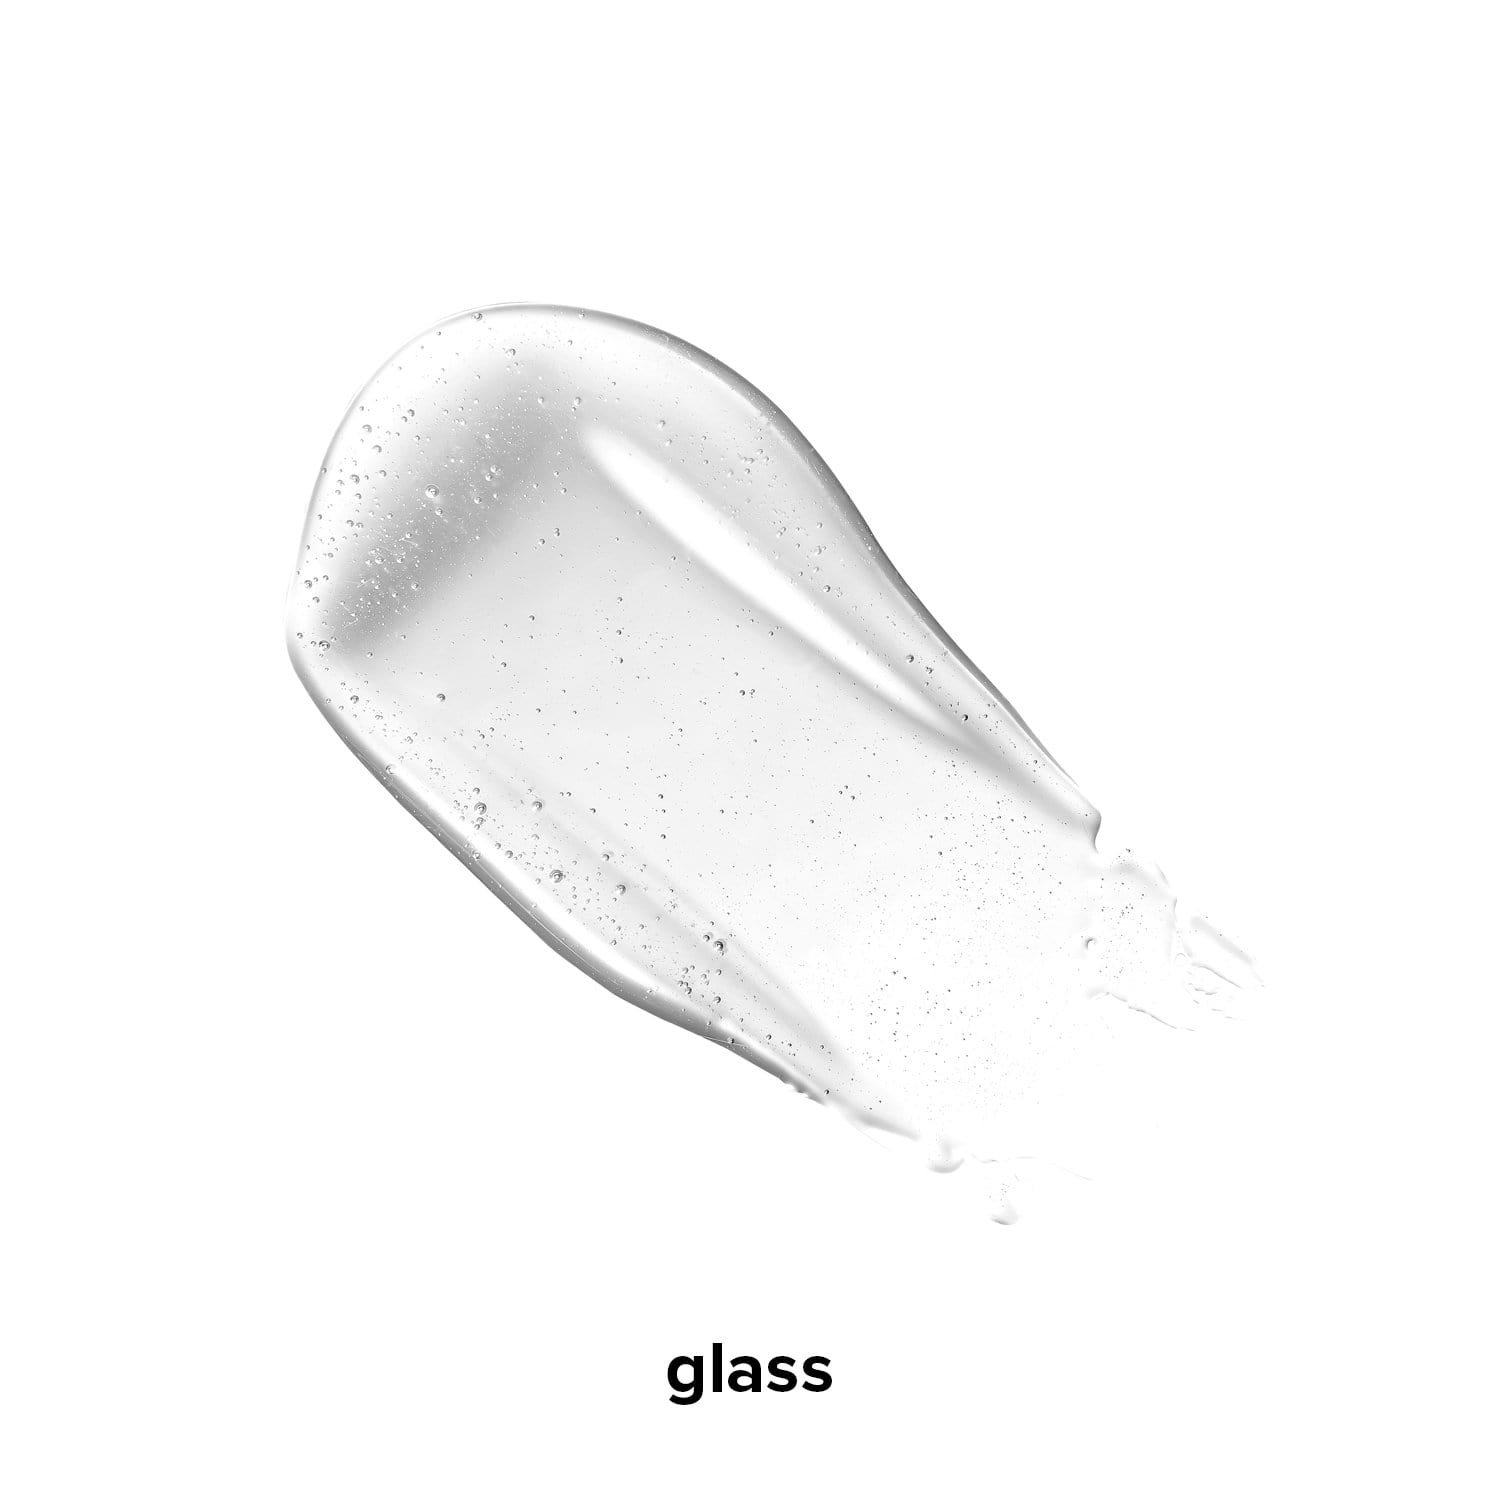 gloss'd Glass - Clear Makeup supercharged gloss oil